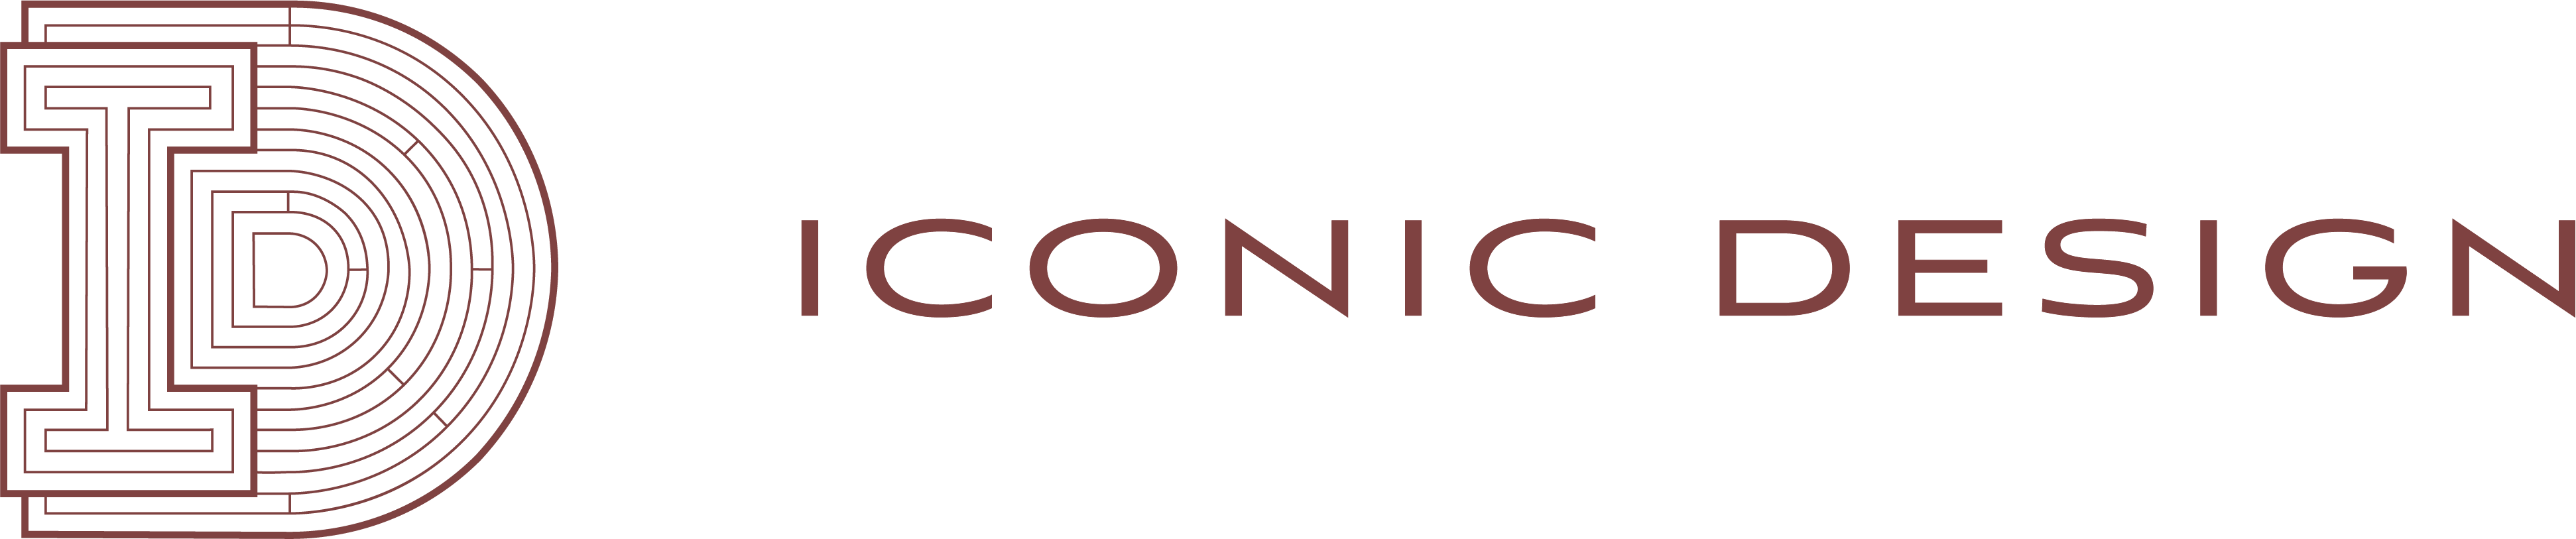 Dark logo for Mobile Screens Iconic Design